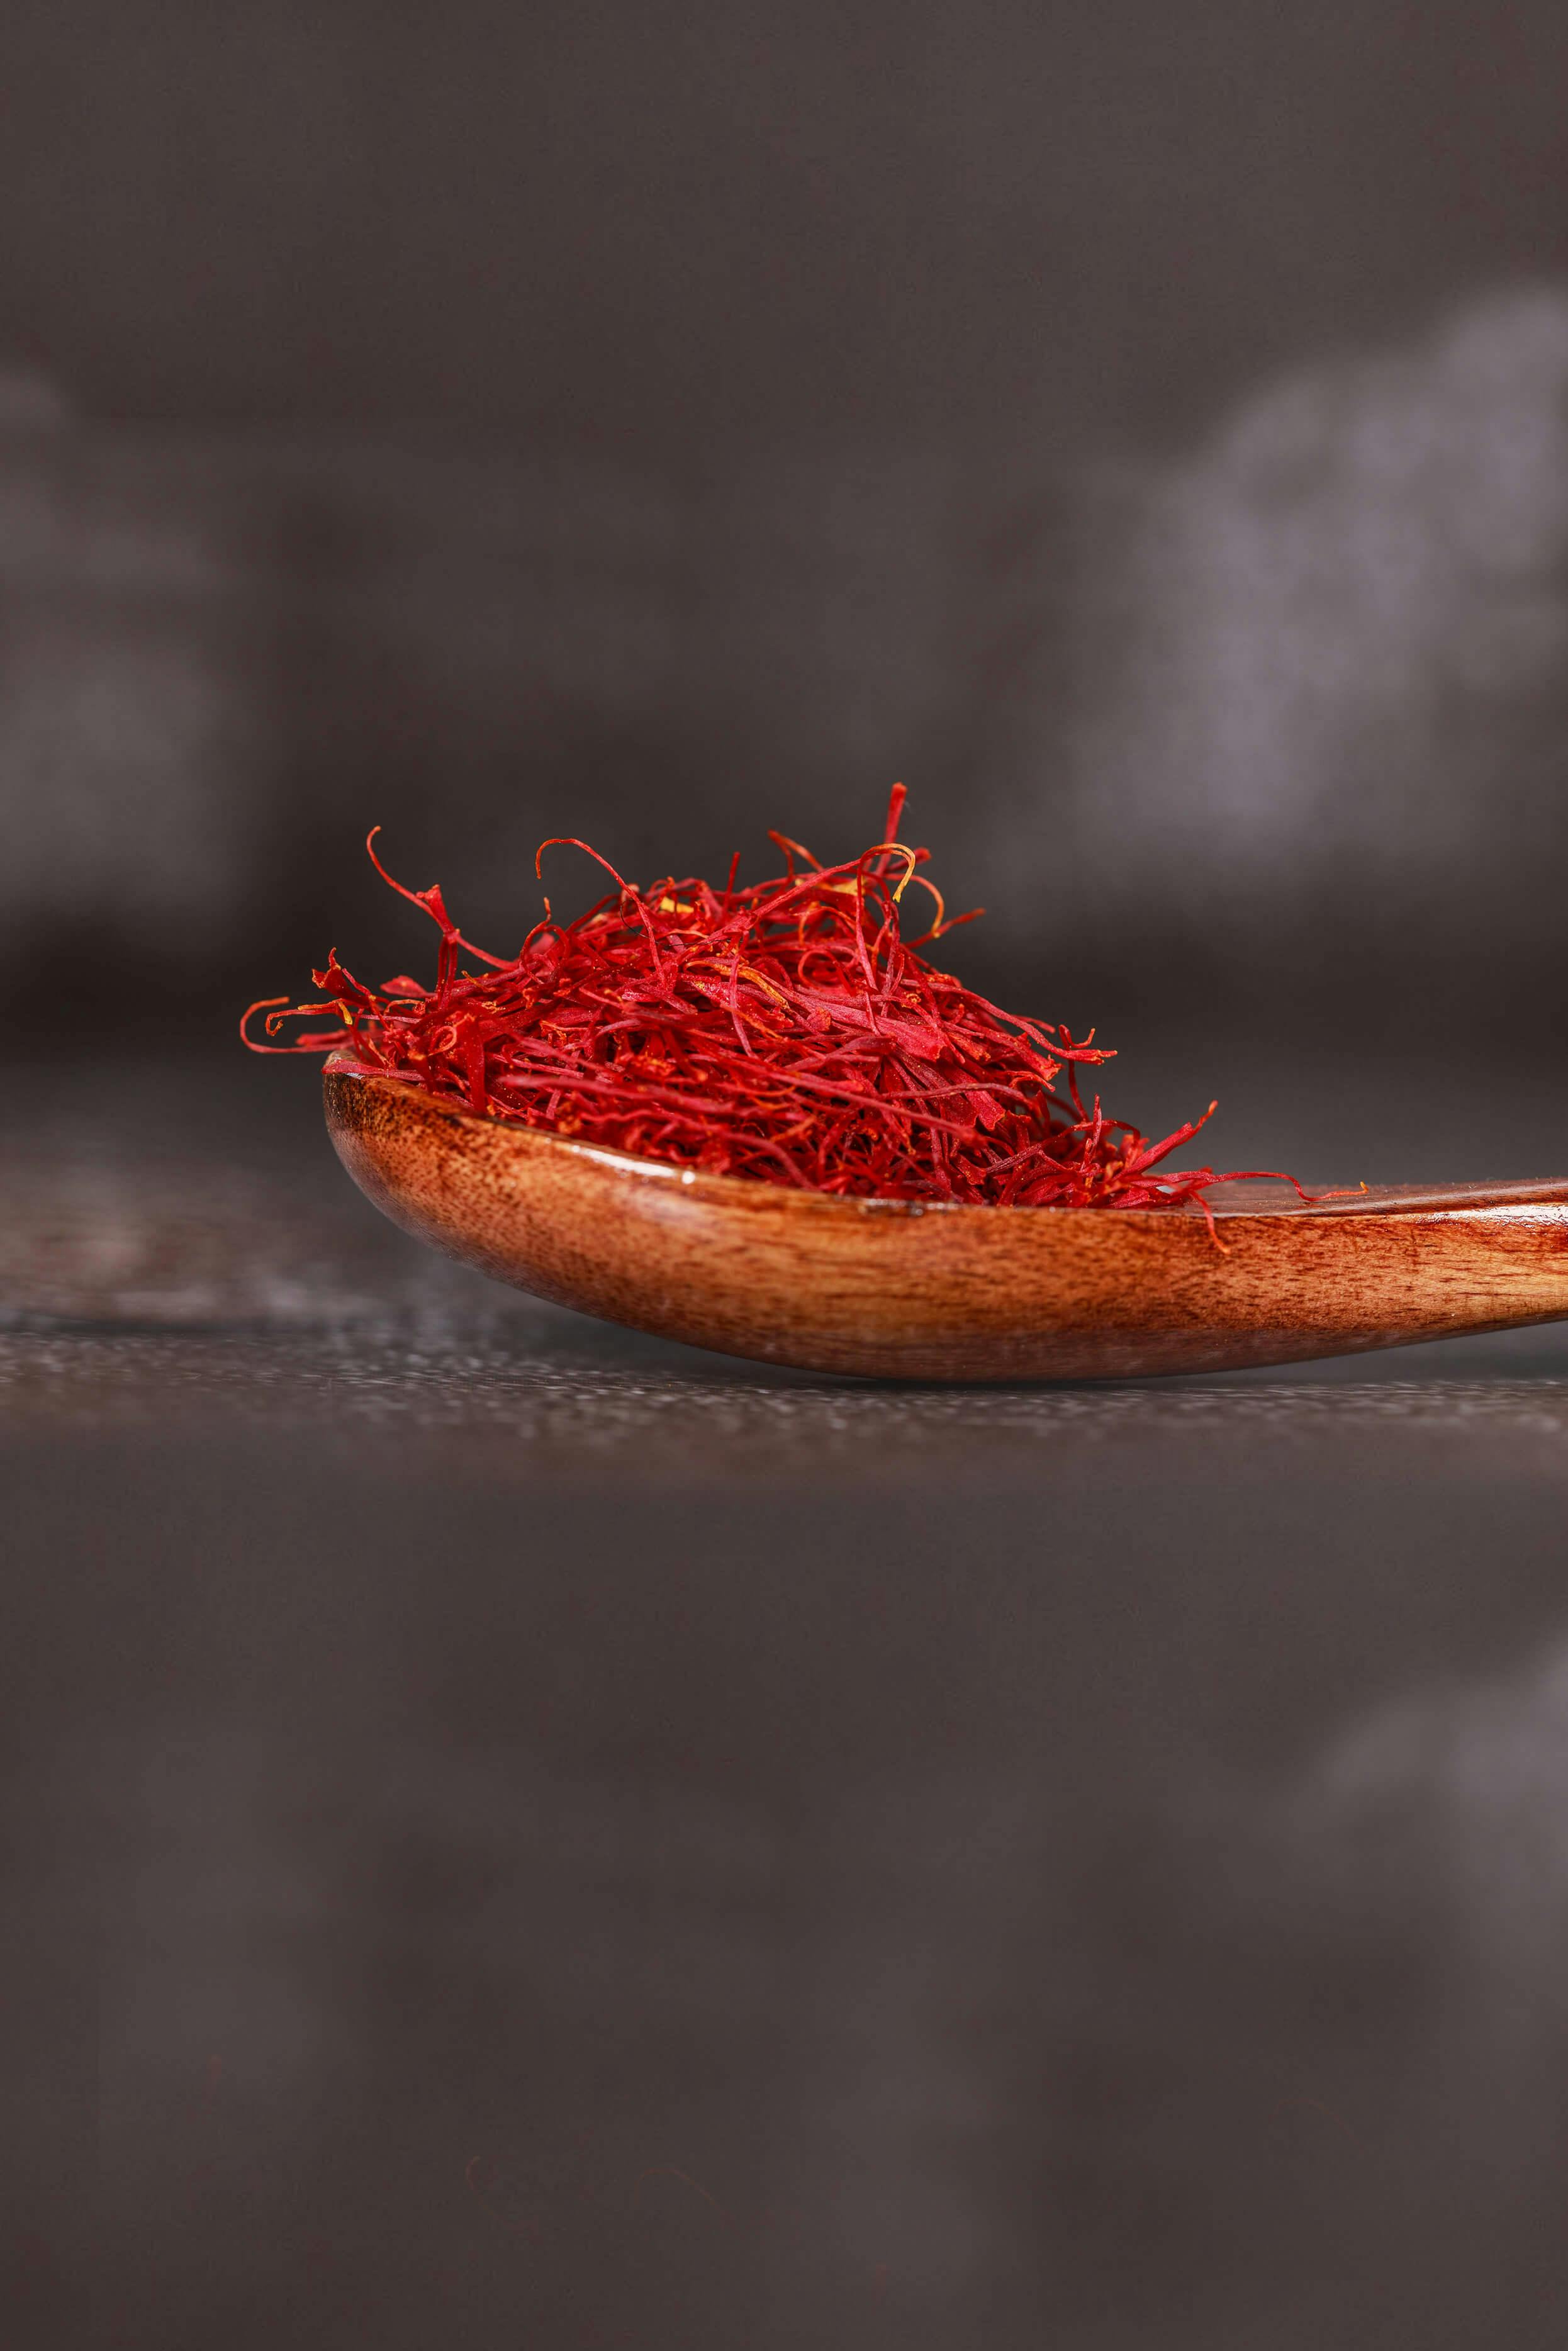 Picture of saffron on a spoon.